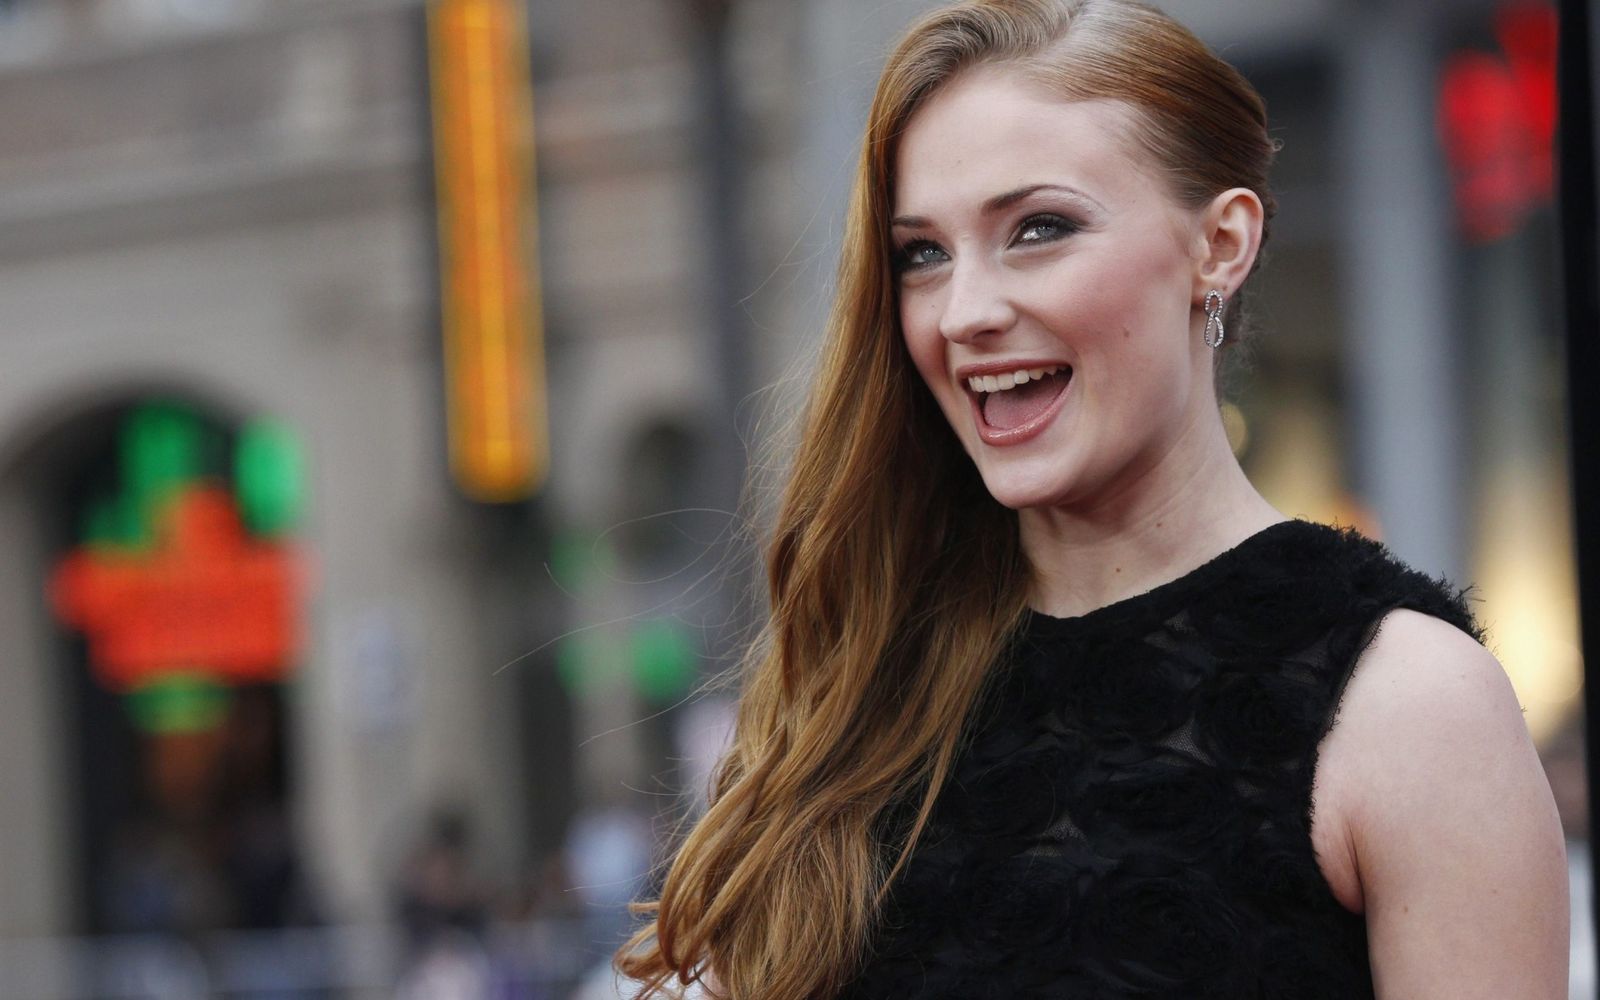 Social Media Helped Alot In Bagging The Role Of Sansa Stark: Sophie Turner